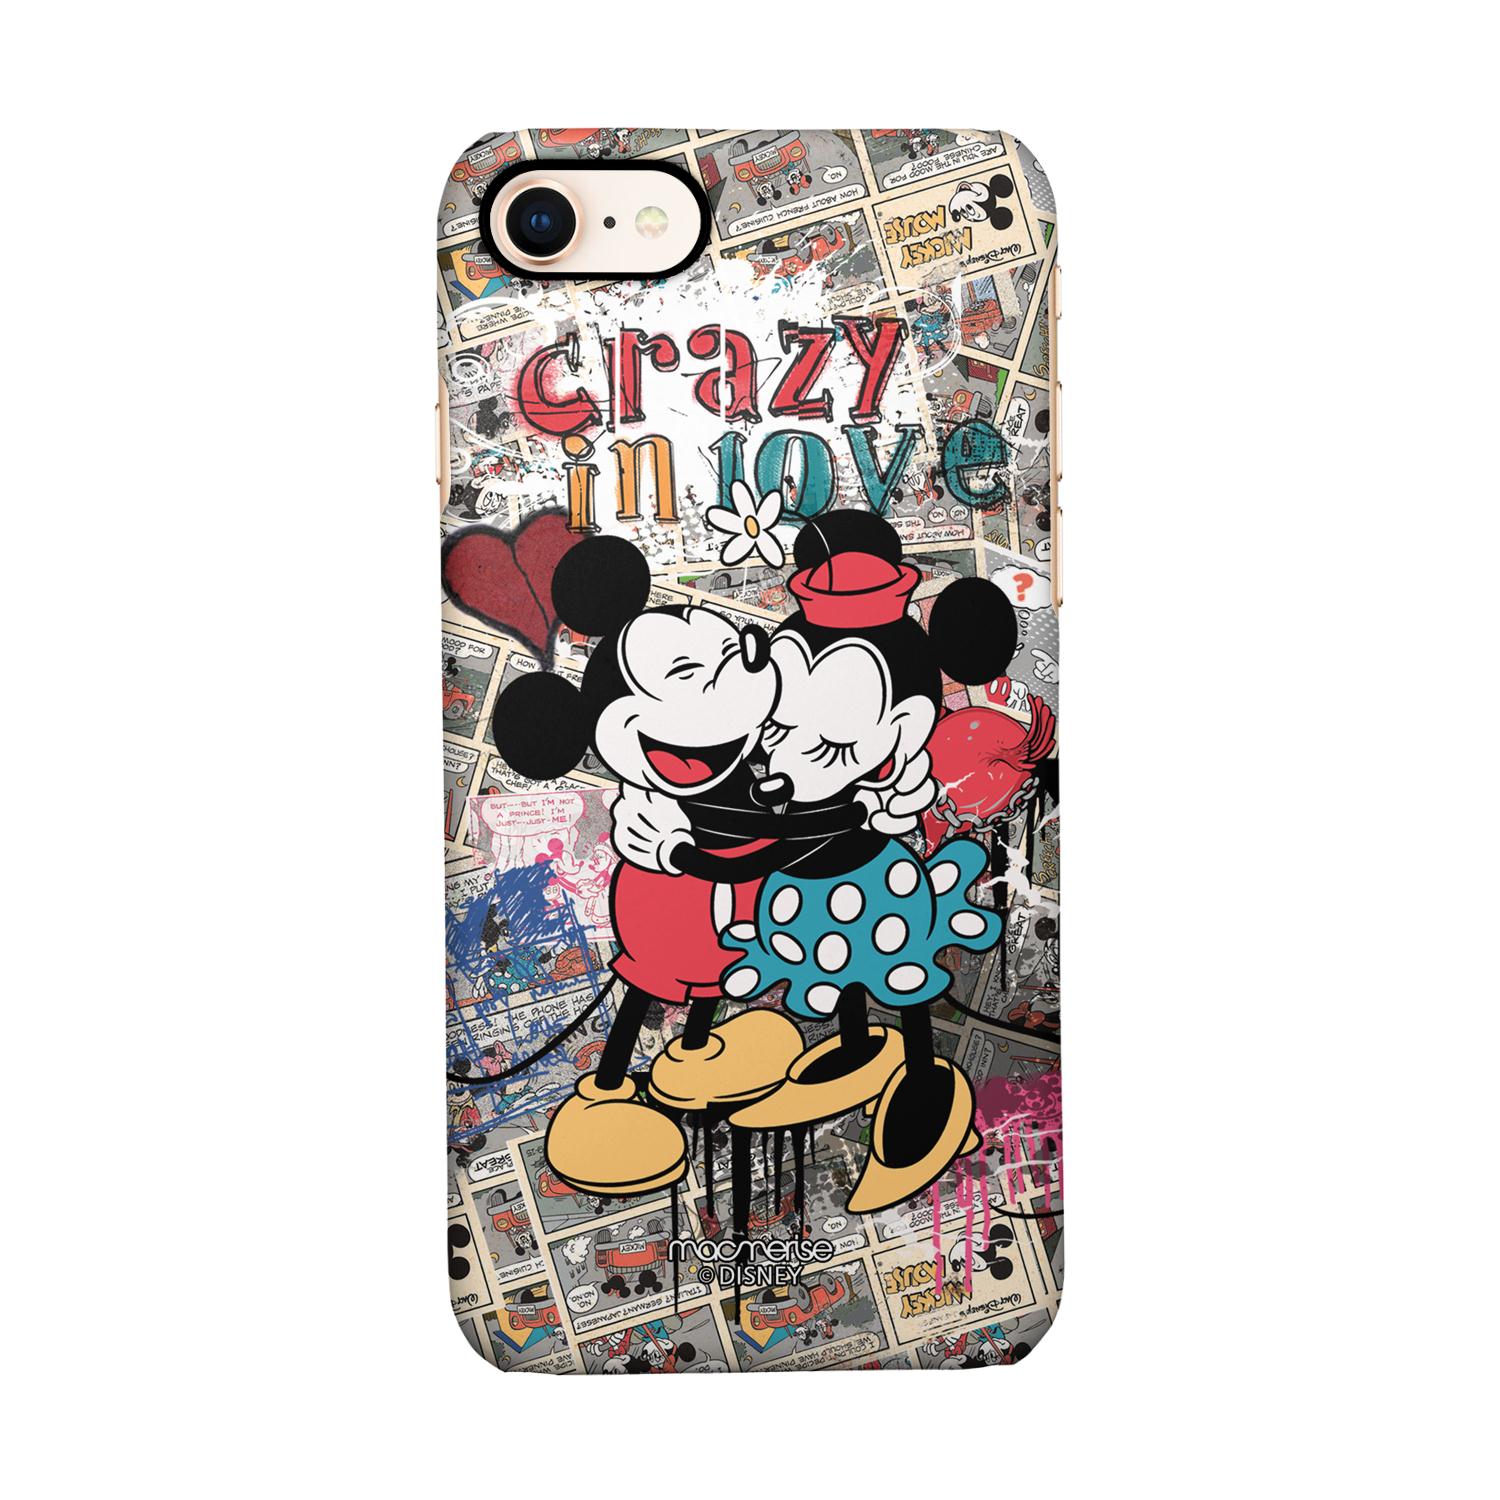 Buy Crazy in love - Sleek Phone Case for iPhone 8 Online